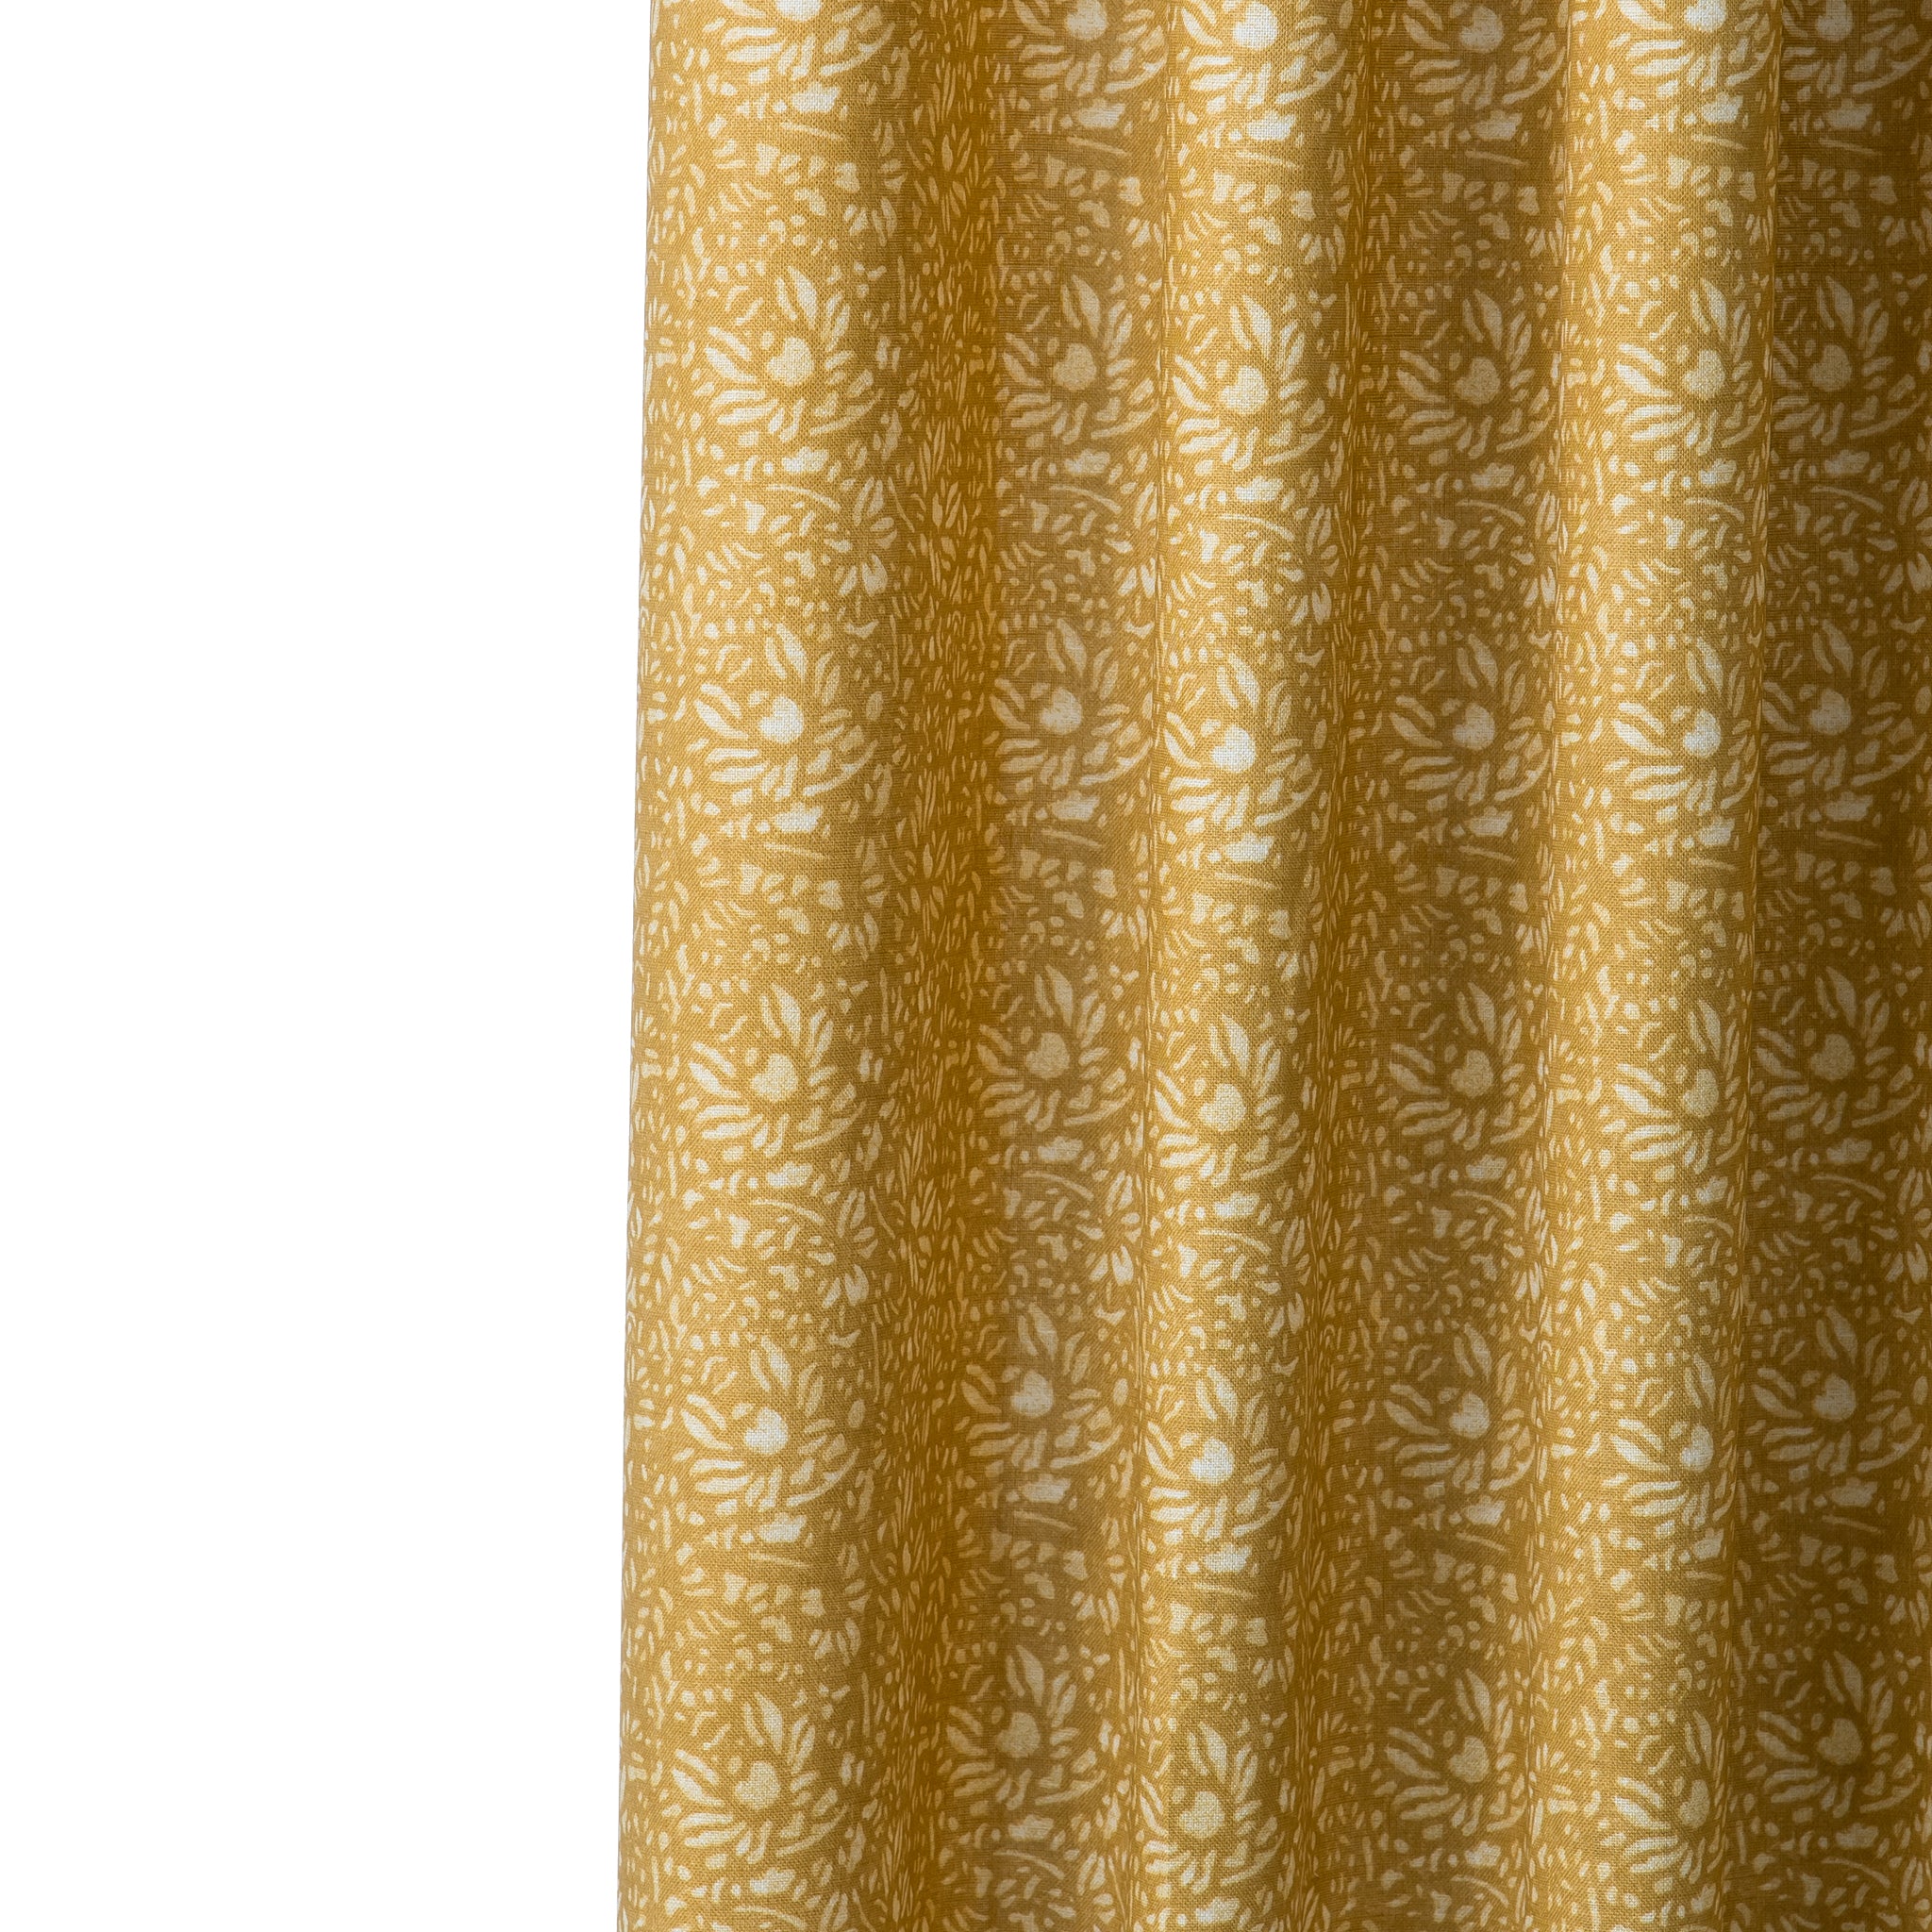 Chrysanthemum Fabric - Goldenrod